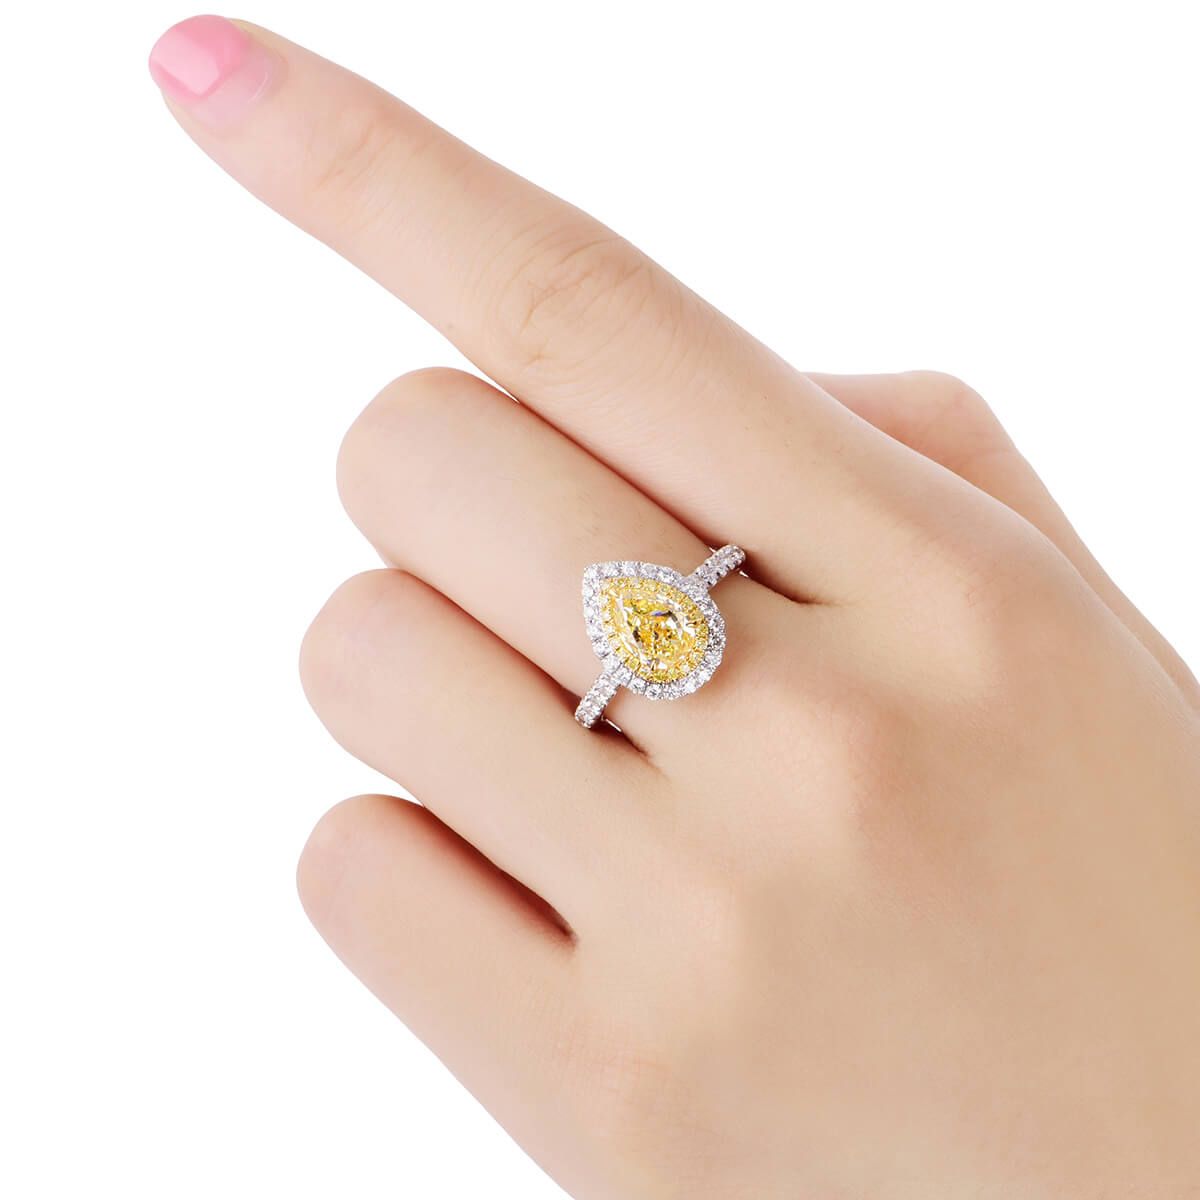 Light Yellow (W-X) Diamond Ring, 1.84 Ct. TW, Pear shape, GIA Certified, 2191268472